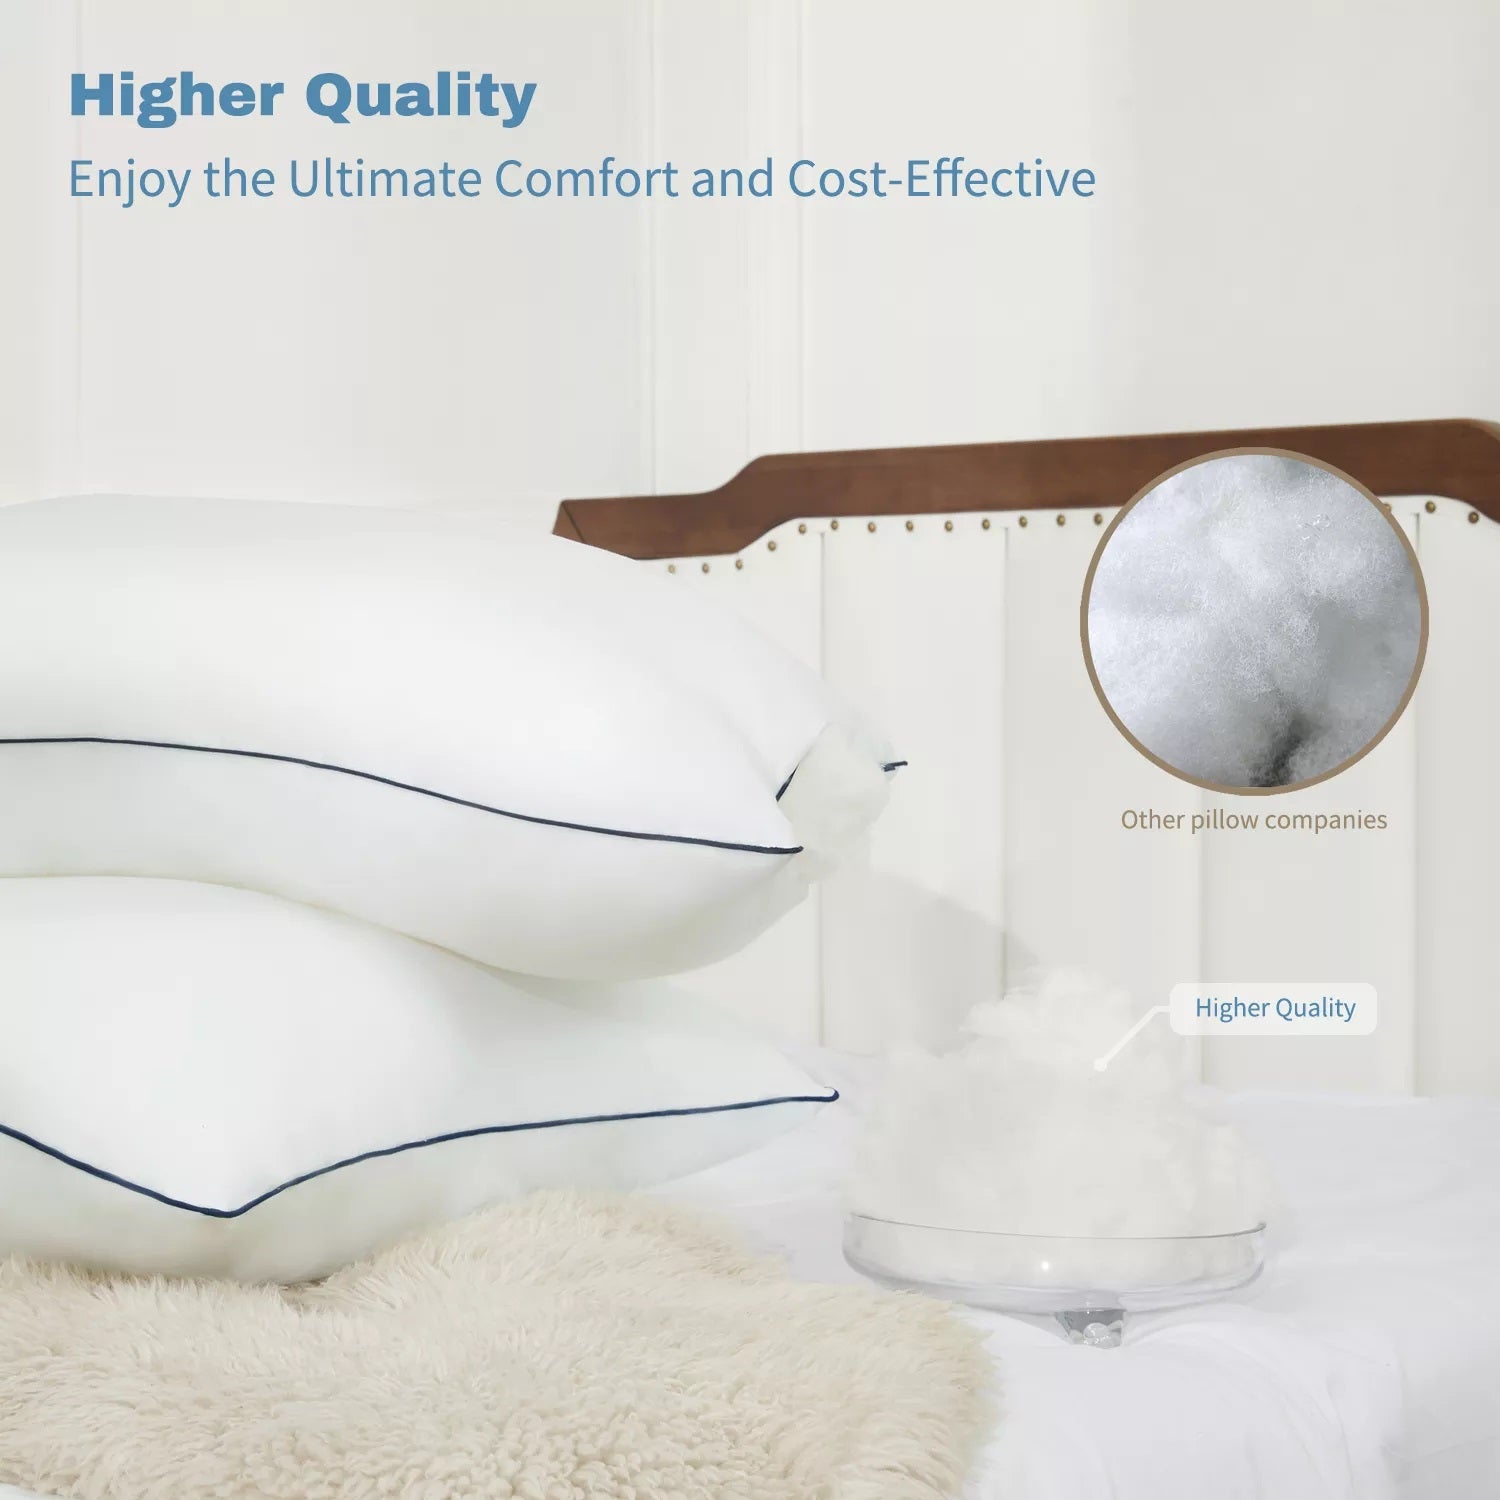 HILTON High Quality Cotton Pillow 1000G 48cm x 74cm Pillows ONE2WORLD 